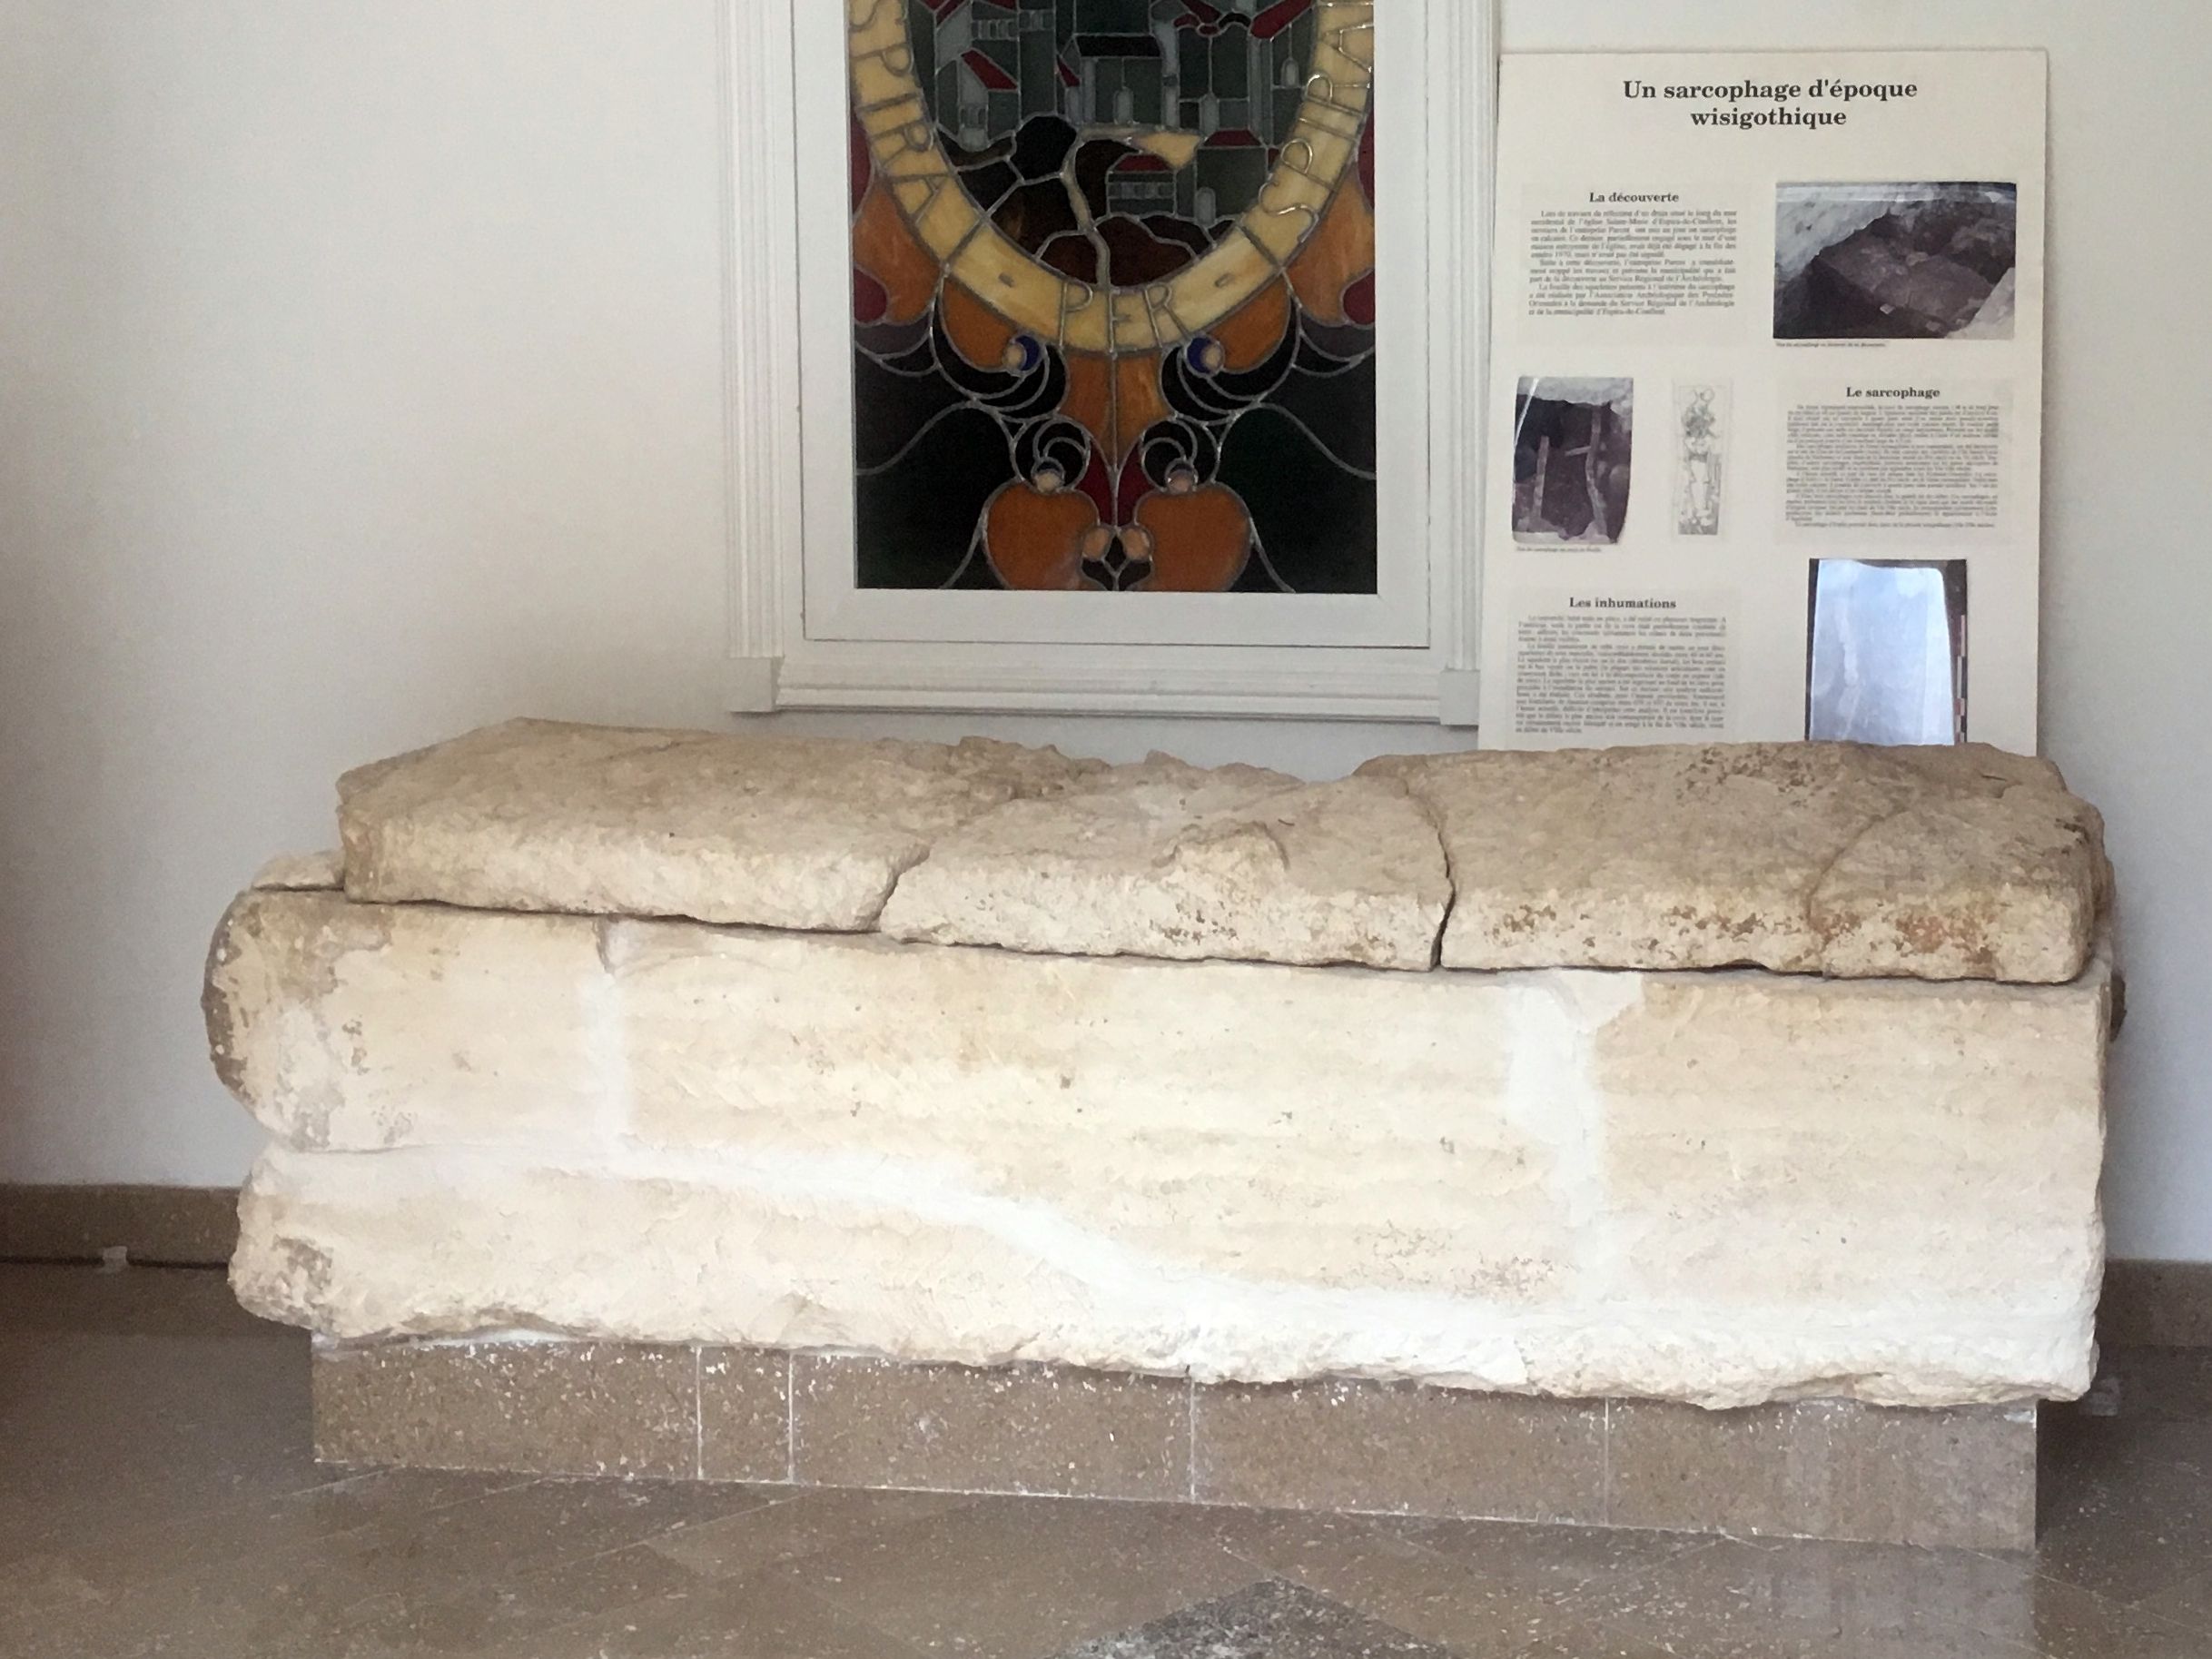 Sarcophage wisigothique d'Espira